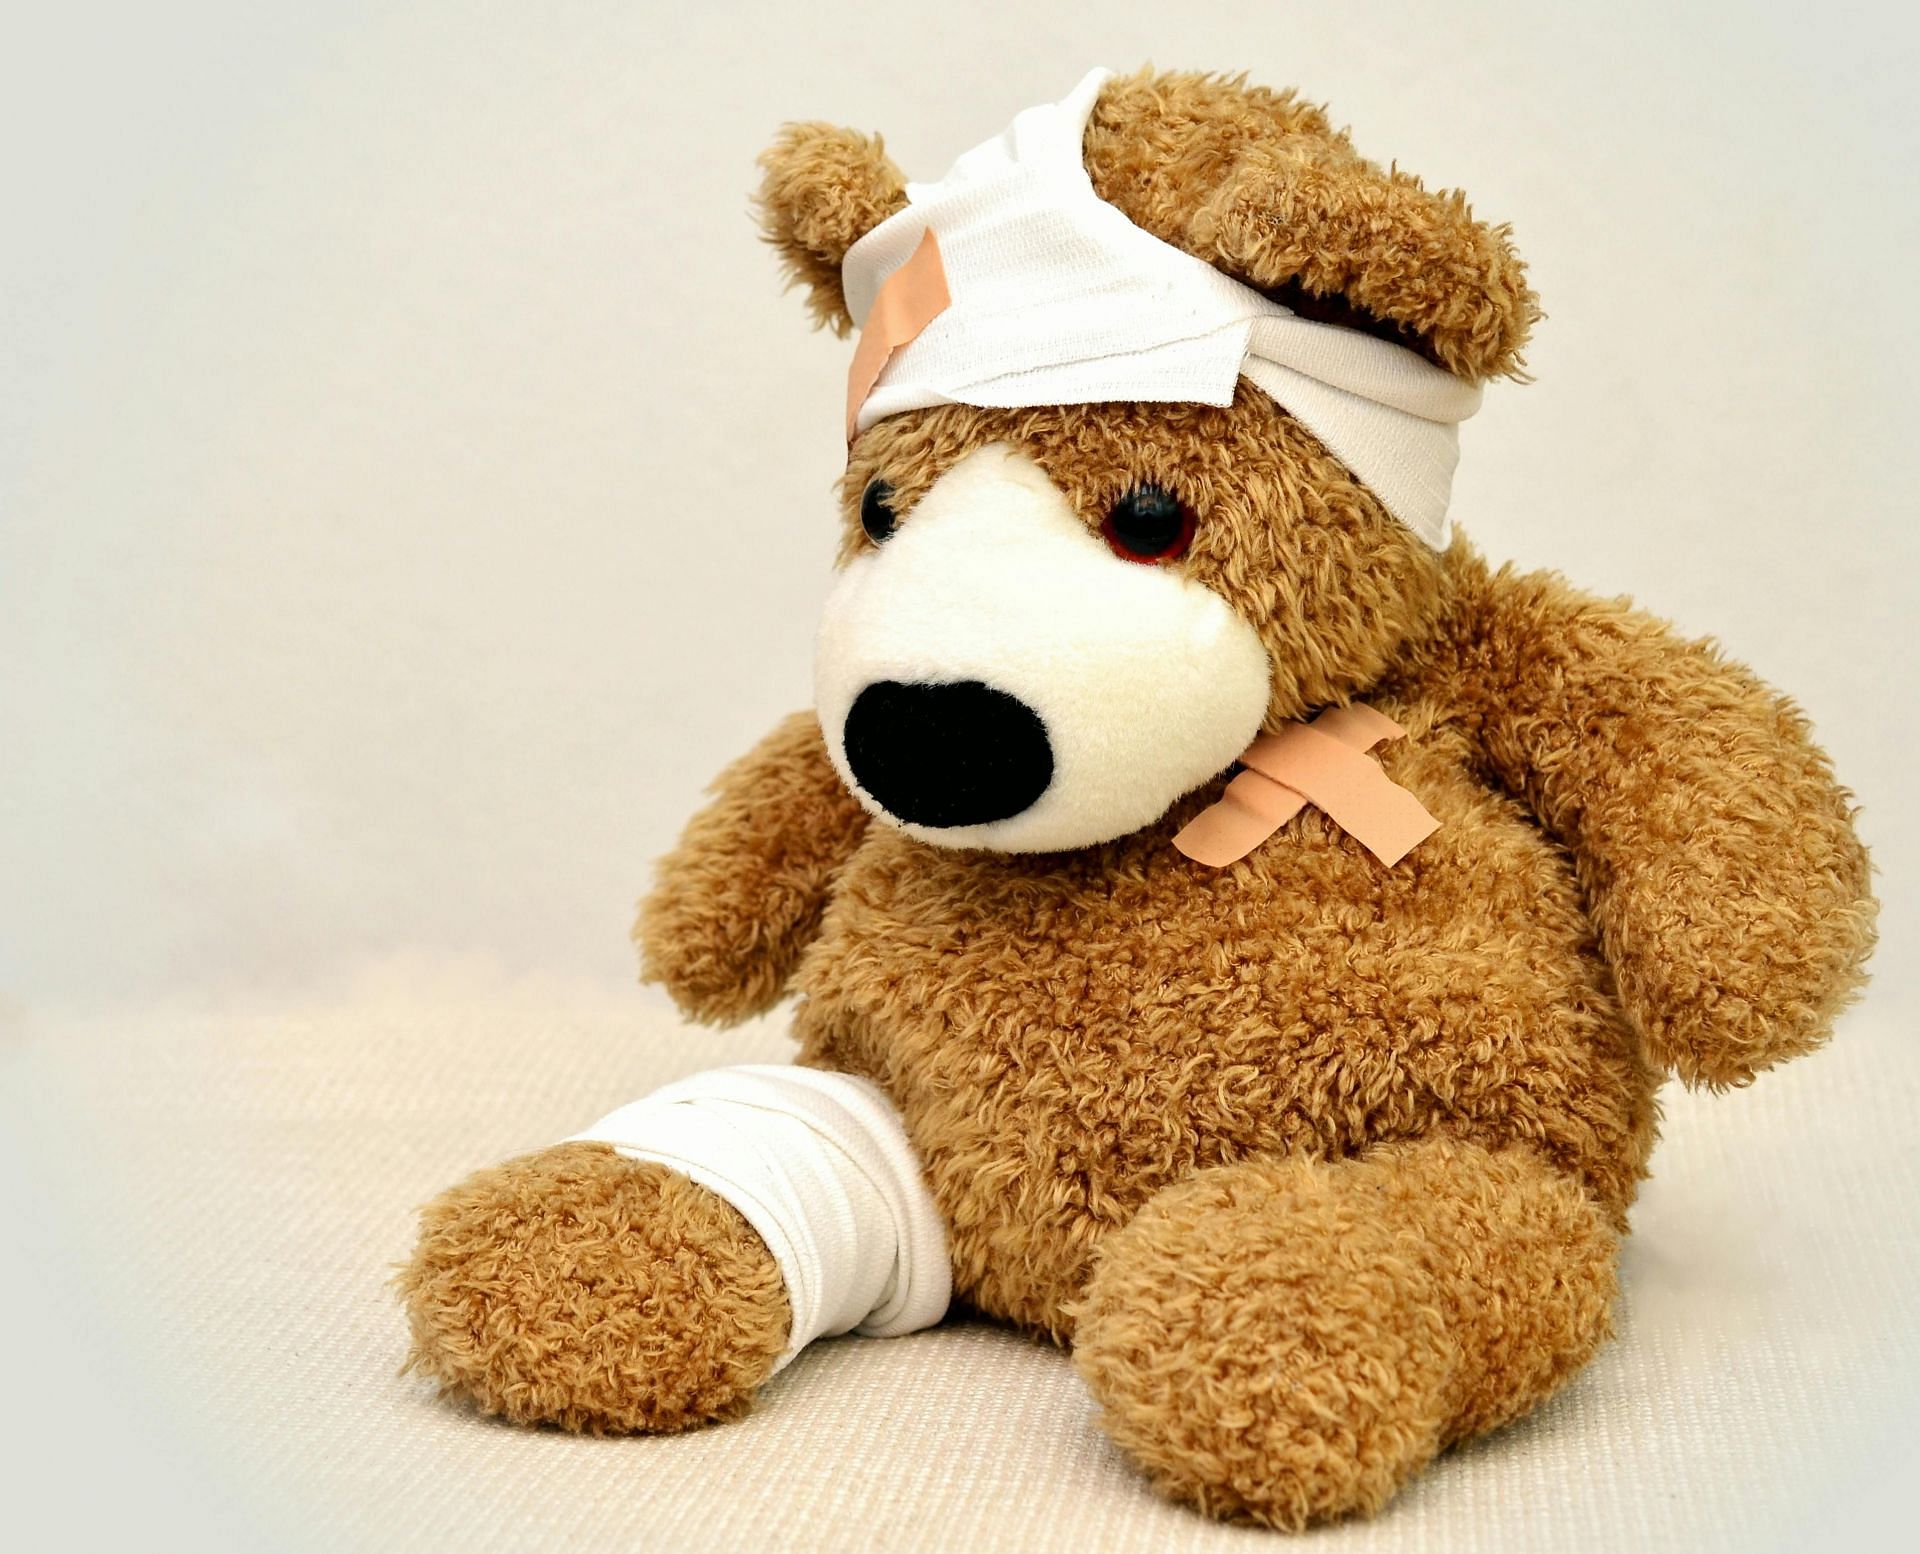 Travel medical kit (image sourced via Pexels / Photo by pixabay)